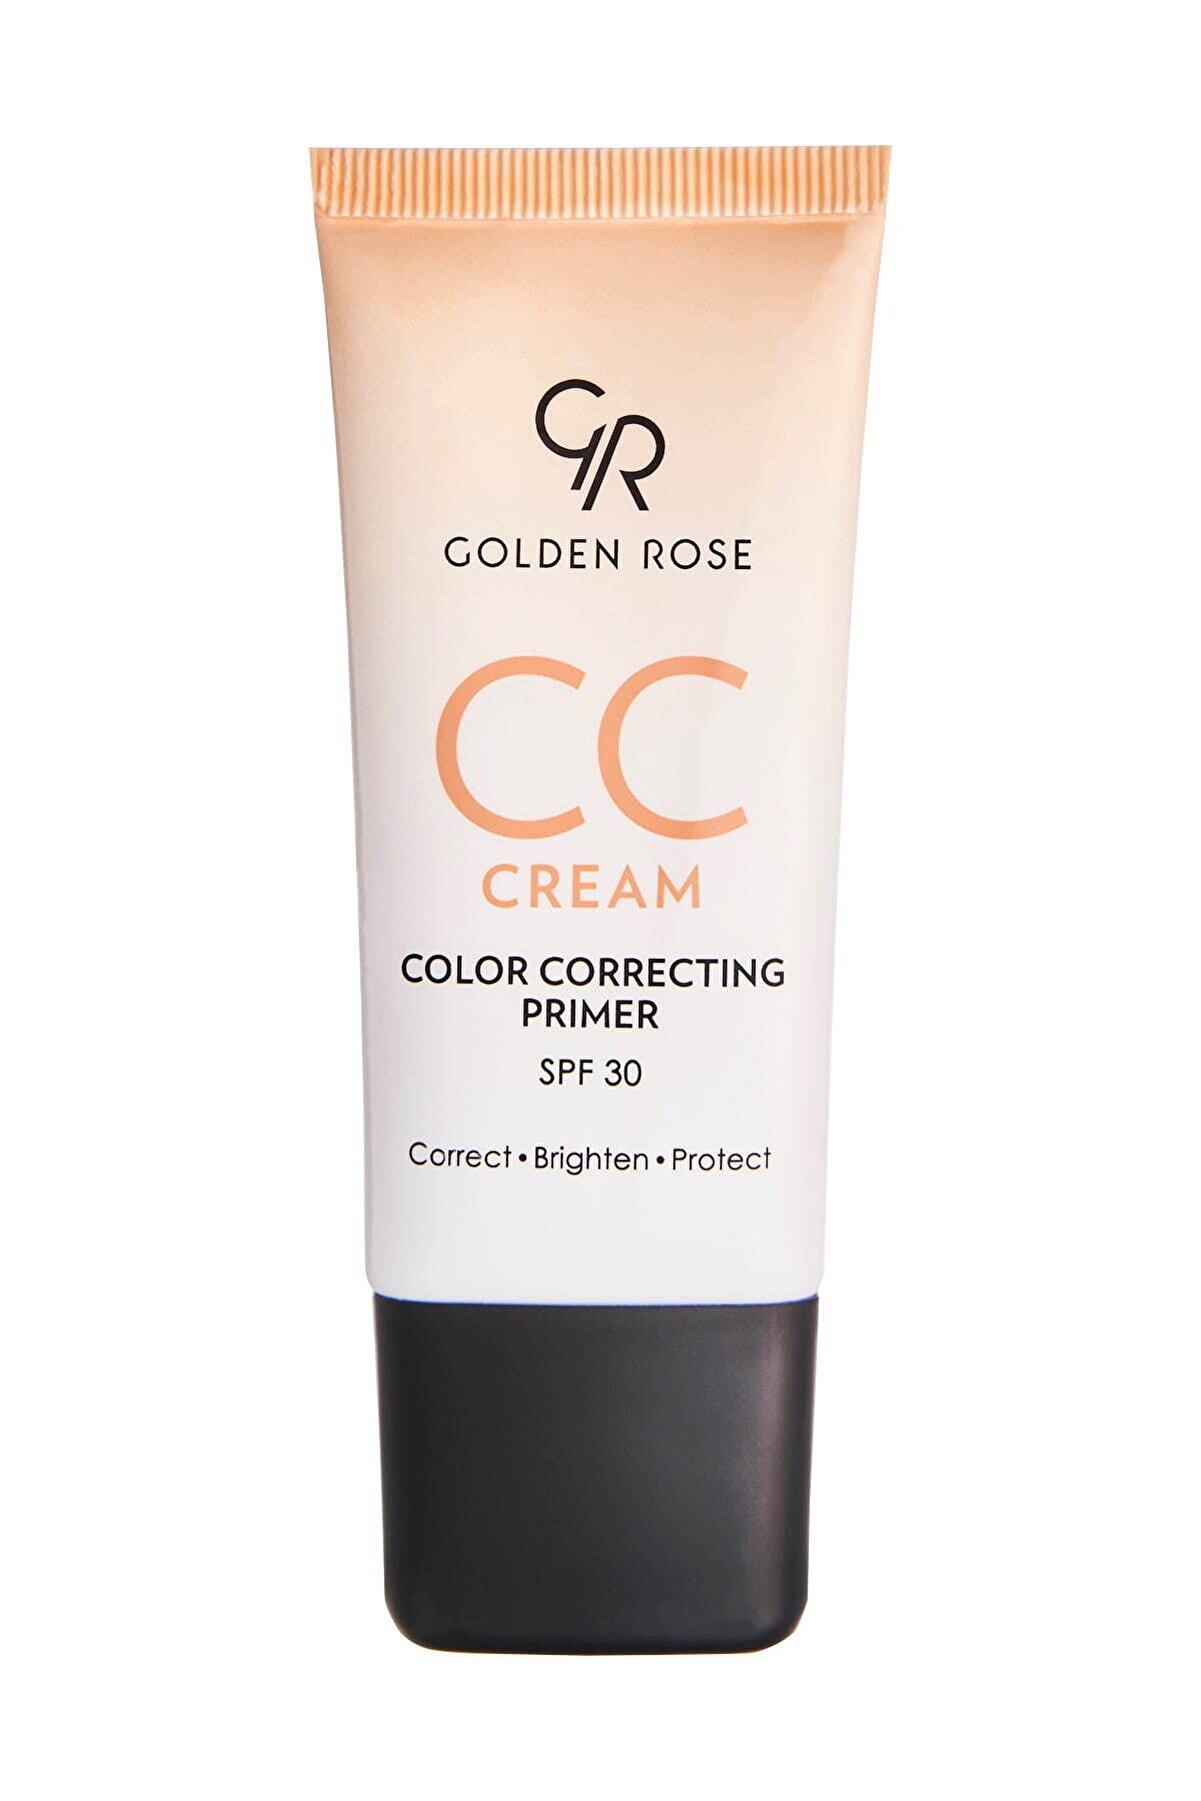 Golden Rose Cc Cream Color Correcting Primer No:02 Orange - Cilt Rengini Dengeleyen Cc Krem